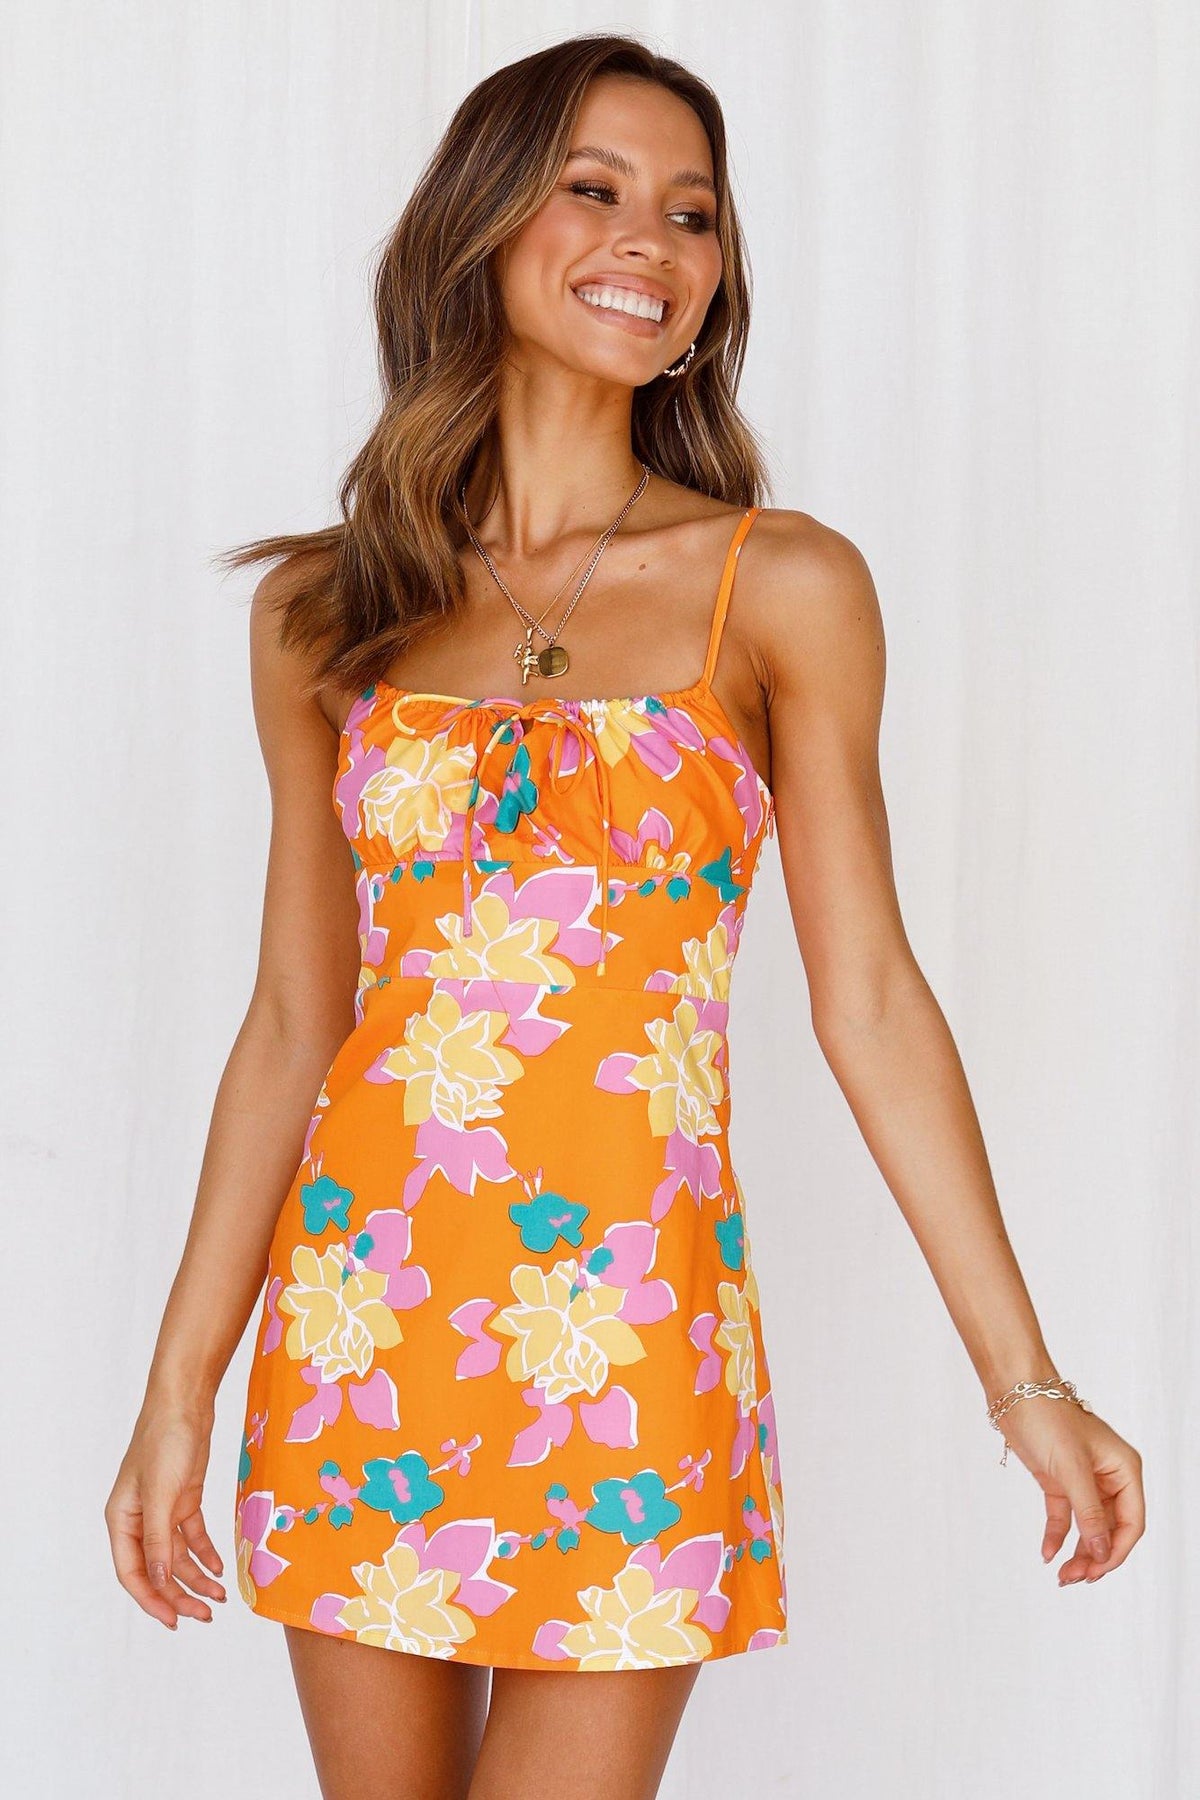 Shop Formal Dress - Fresh Lemonade Dress Orange featured image